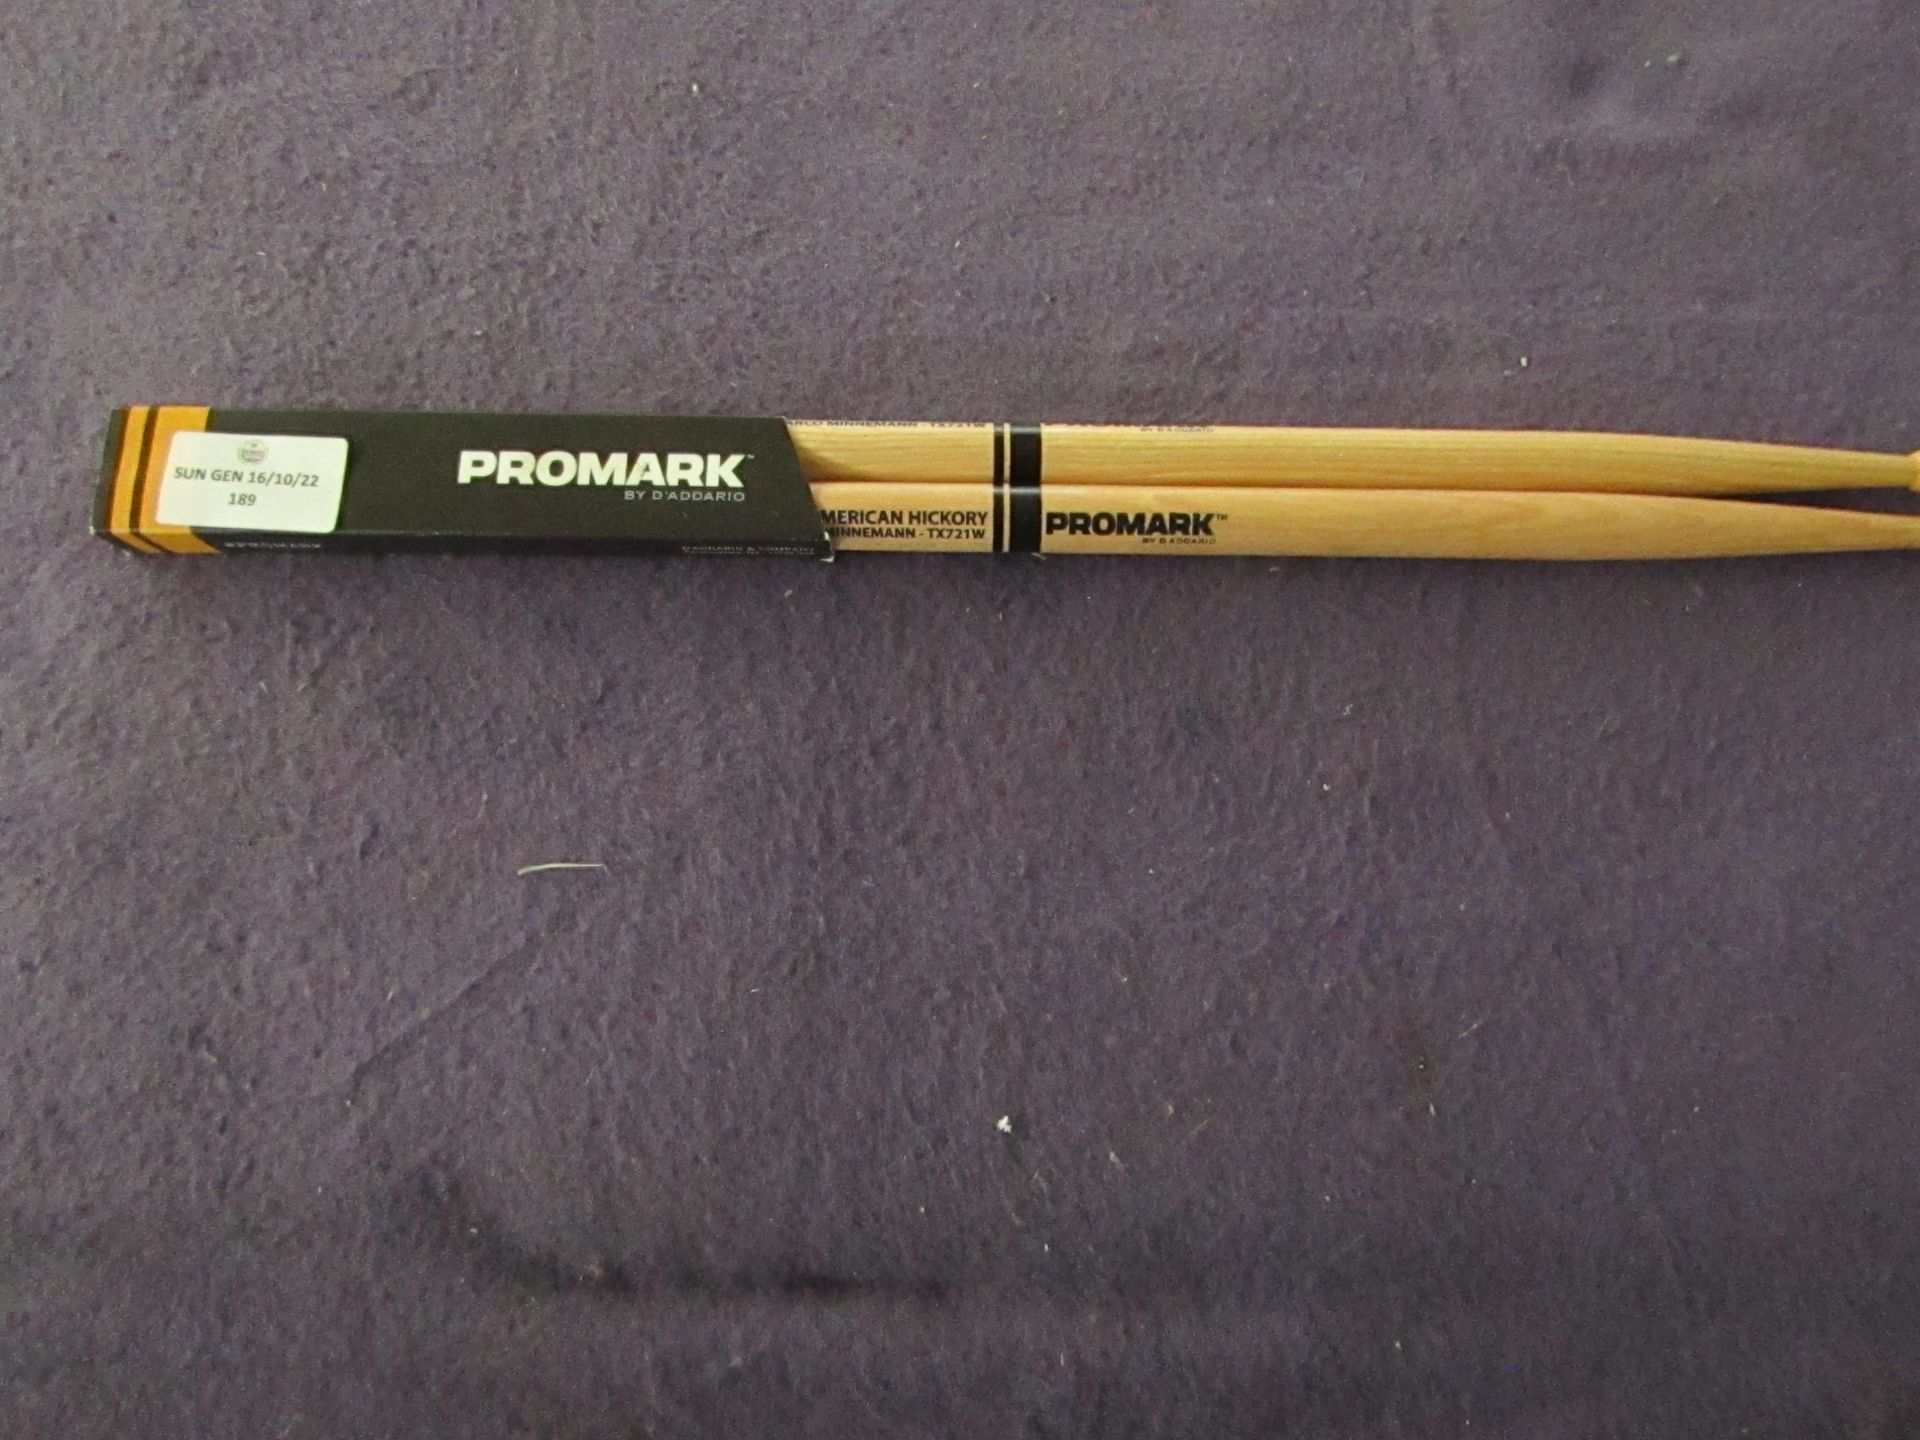 Pro-Mark - Marco Minnemann TX721W American Hickory Drum Sticks - Good Condition.